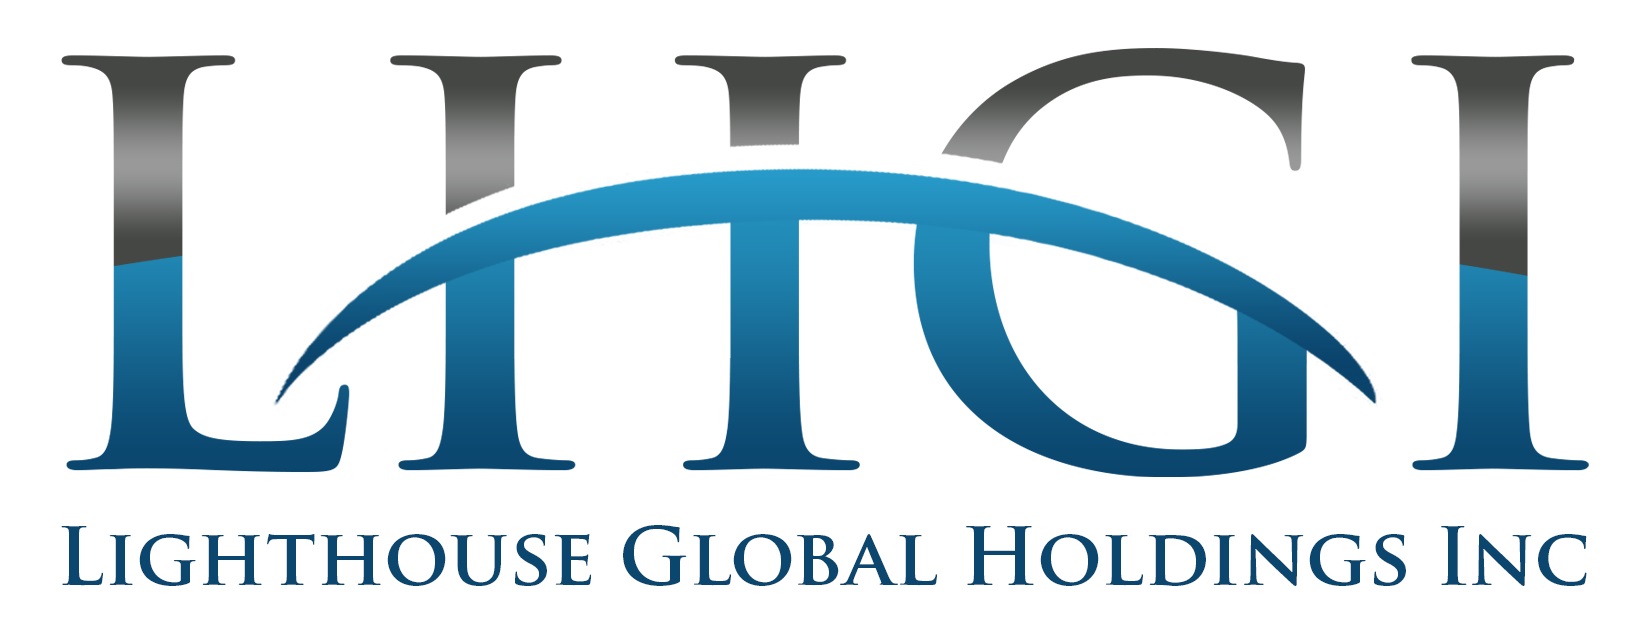 Lighthouse Global Holdings, Inc